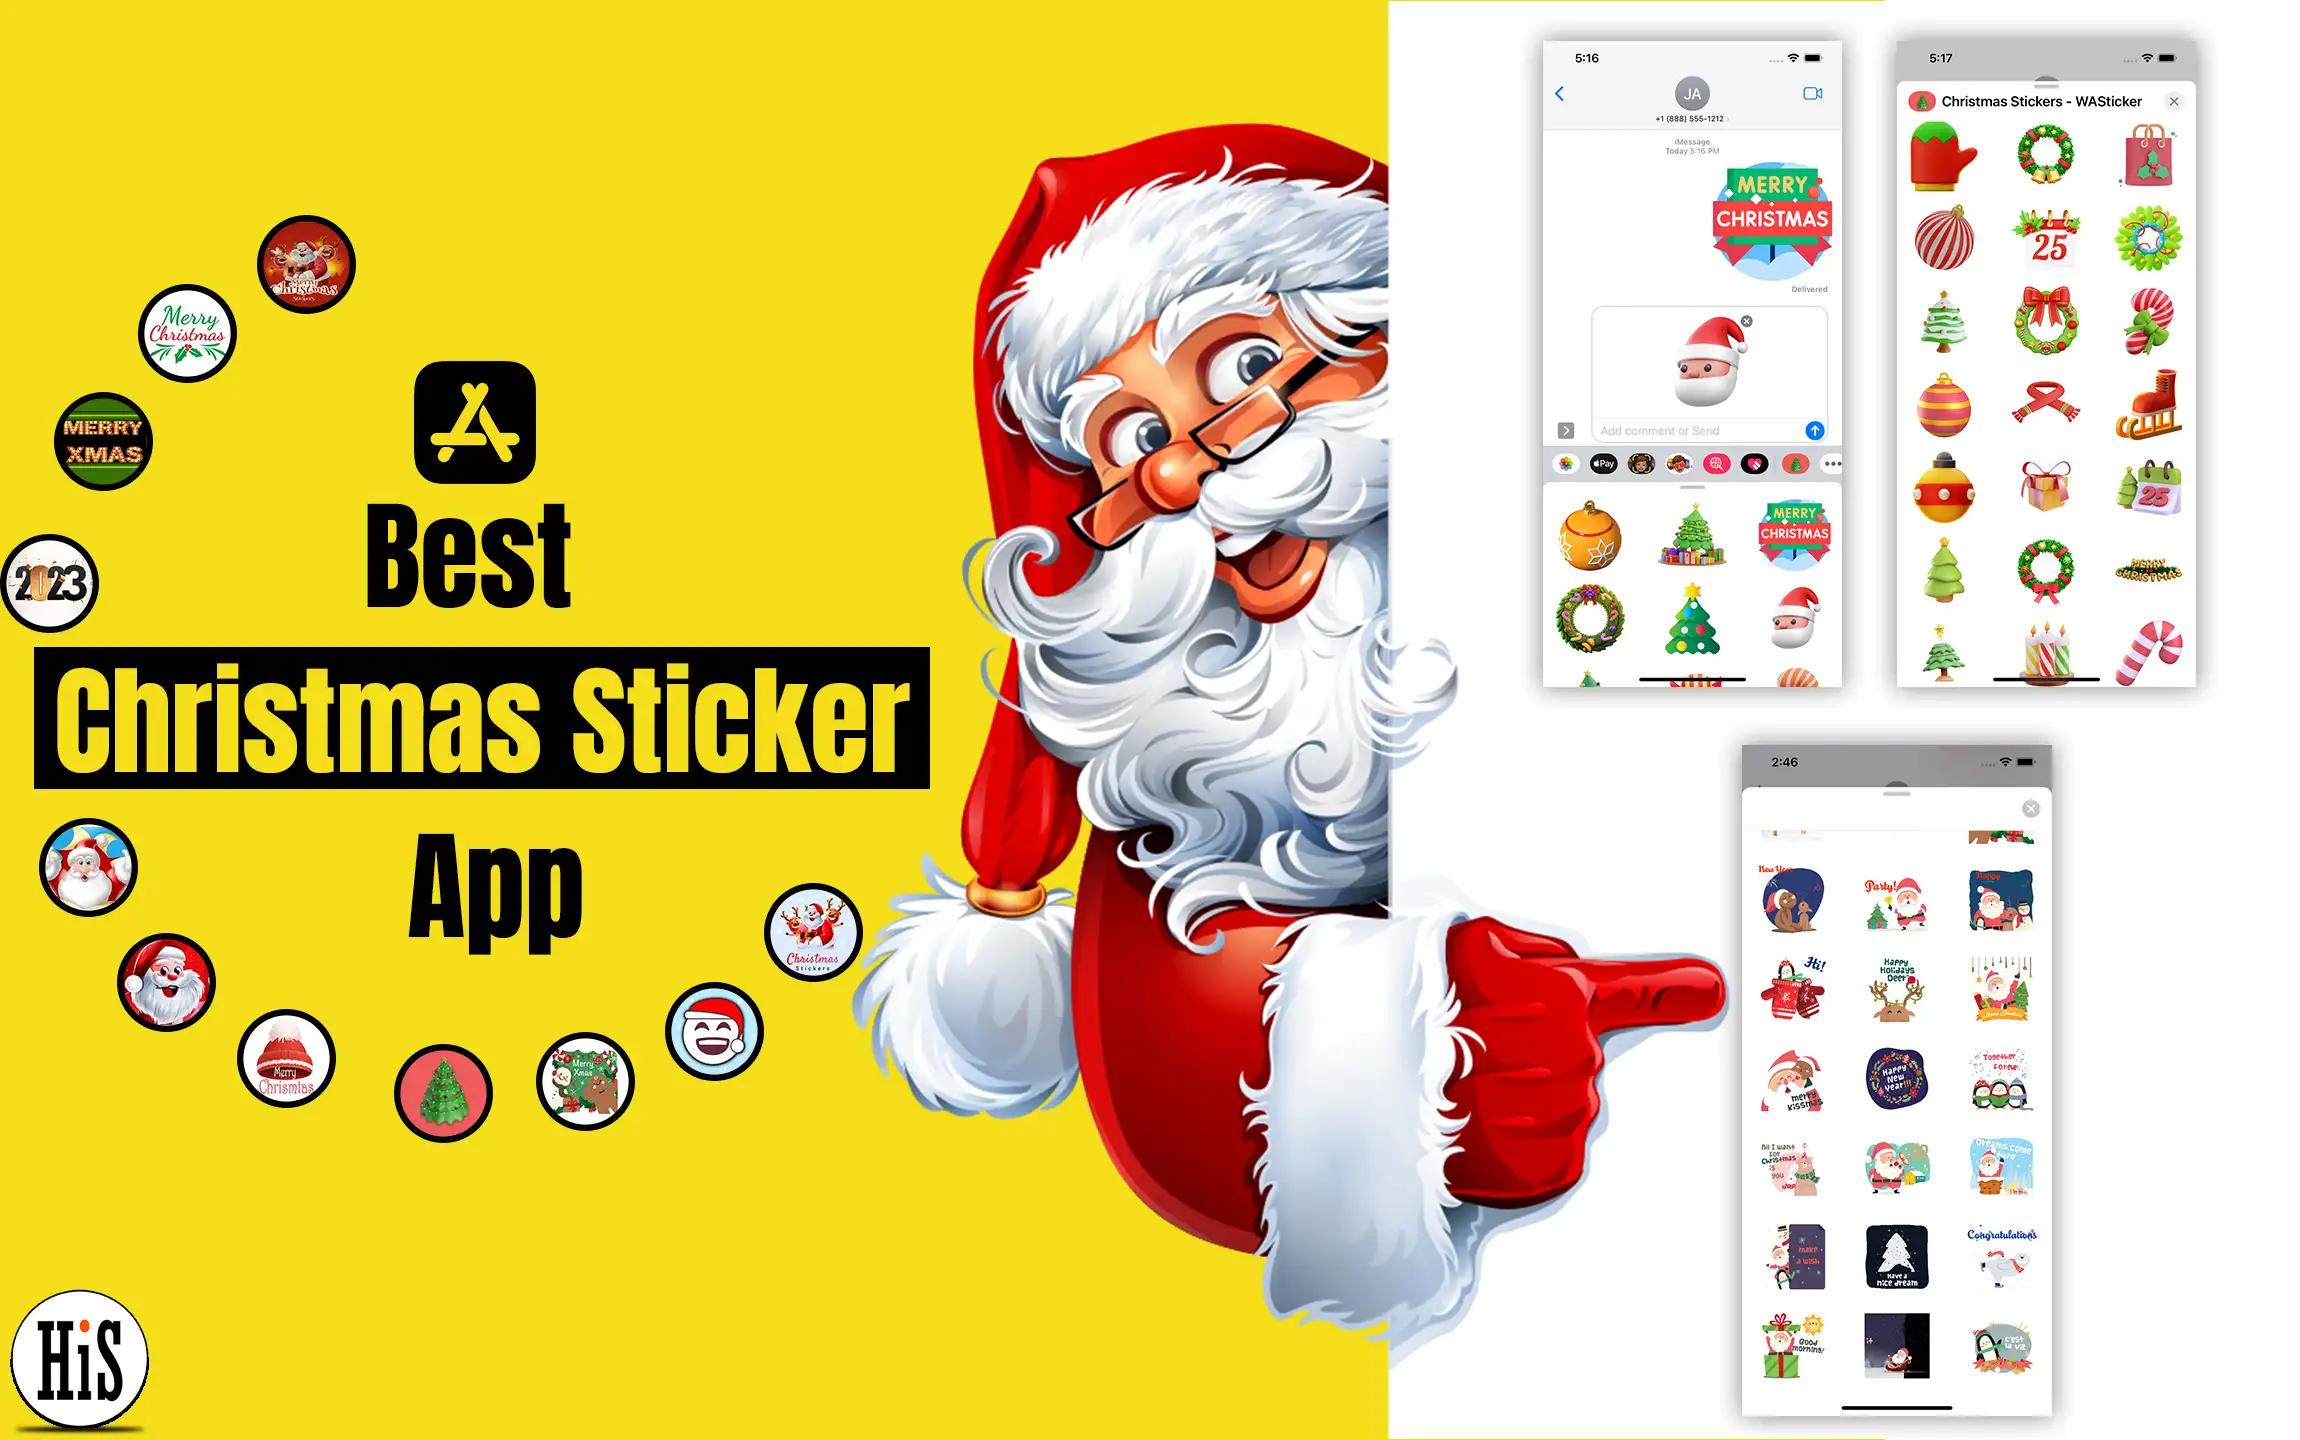 Send Christmas Sticker in iMessage Best Christmas Sticker App